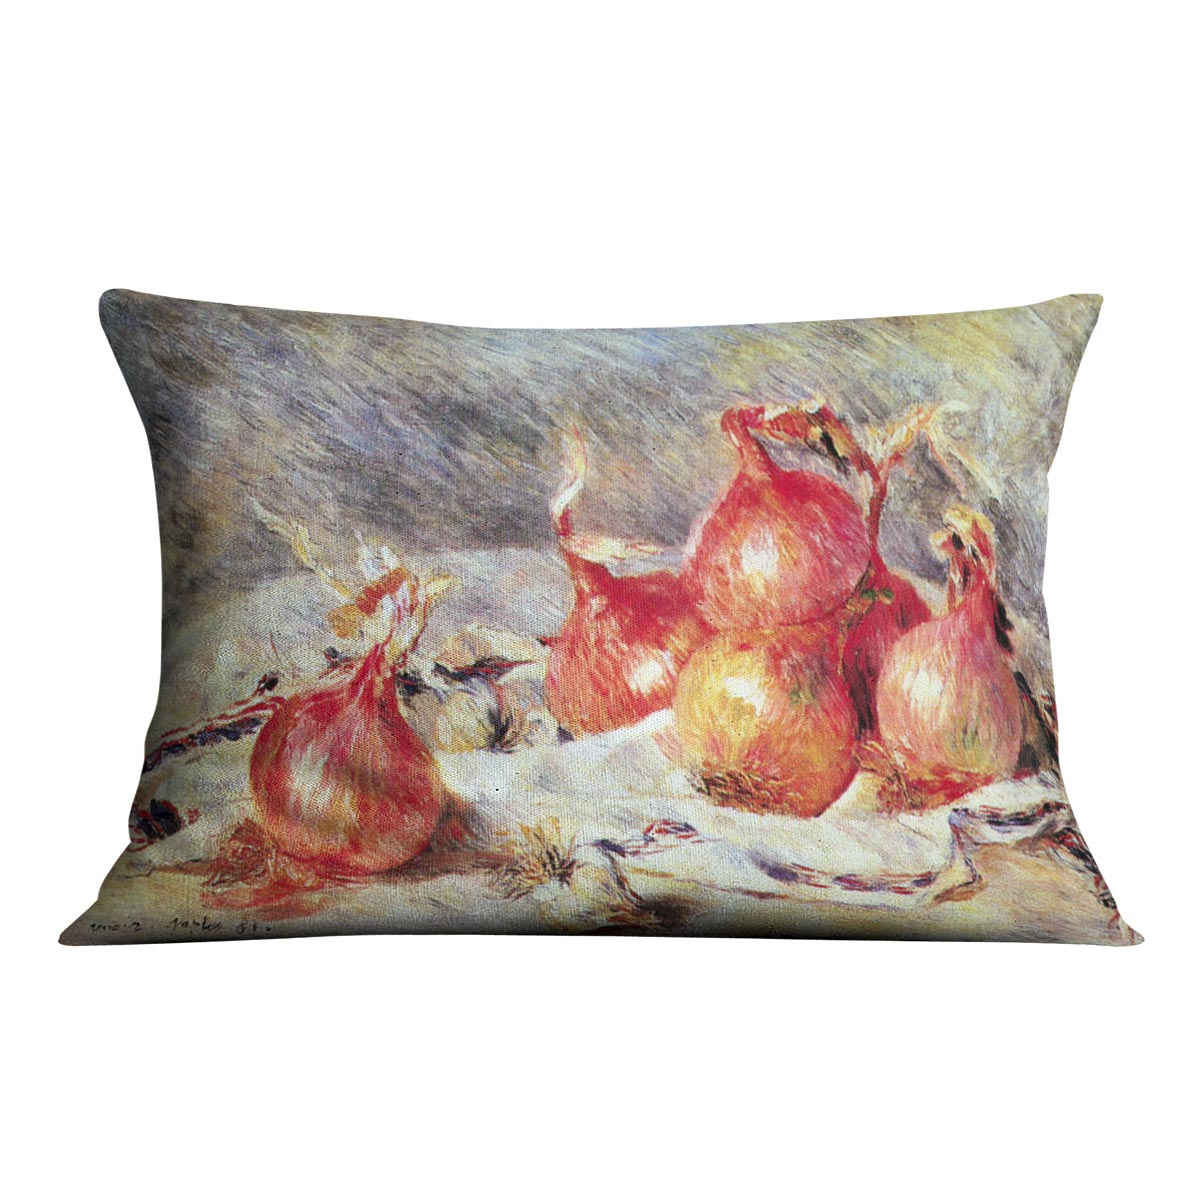 Onions by Renoir Cushion